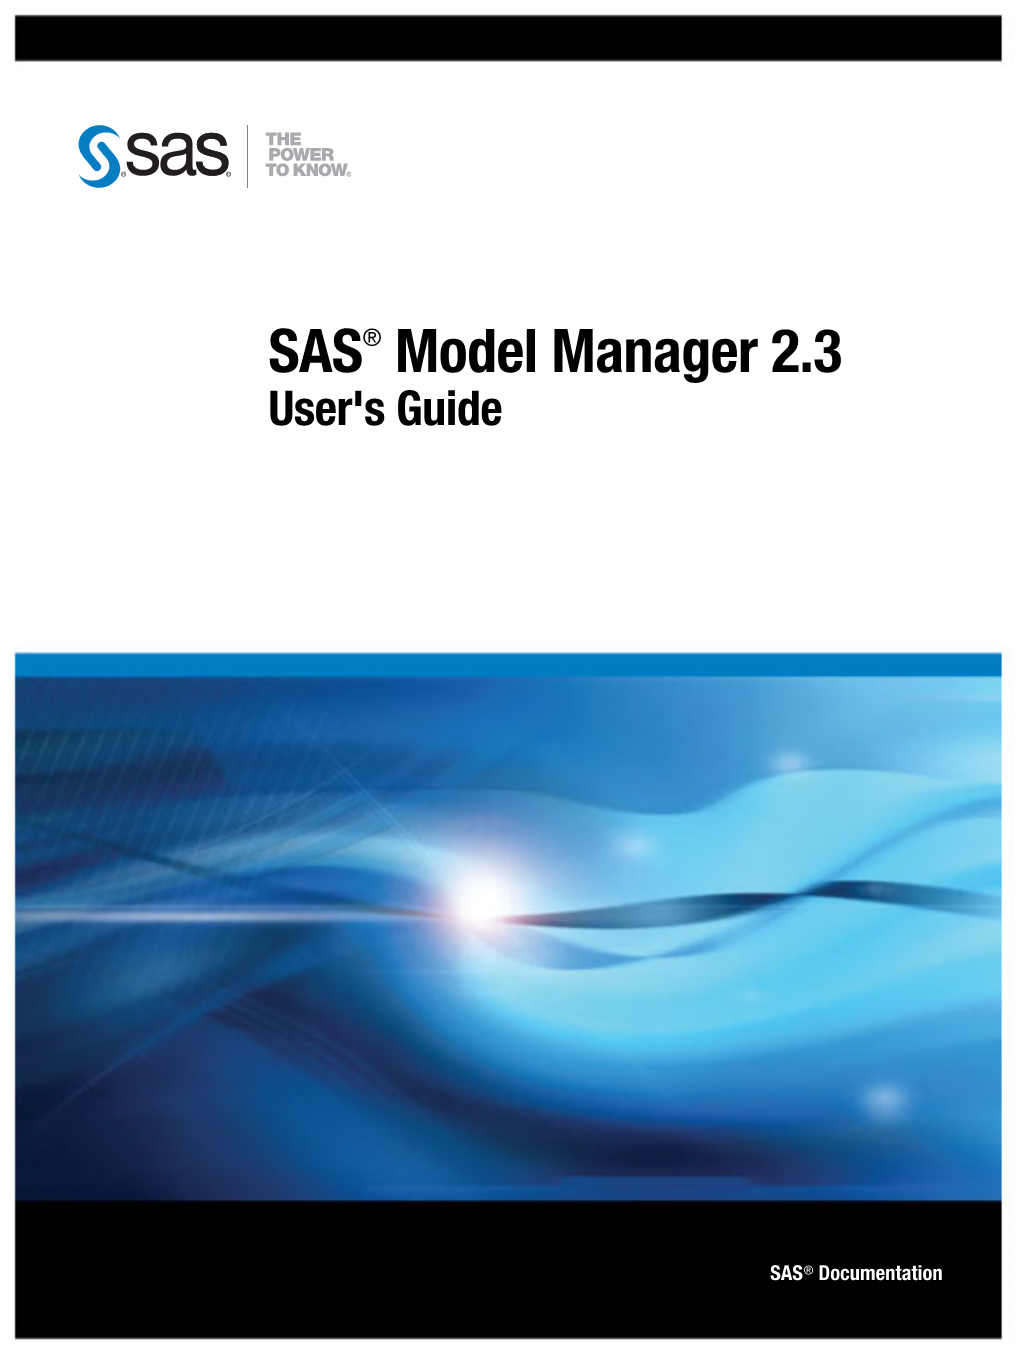 SAS Model Manager 2.3 User's Guide